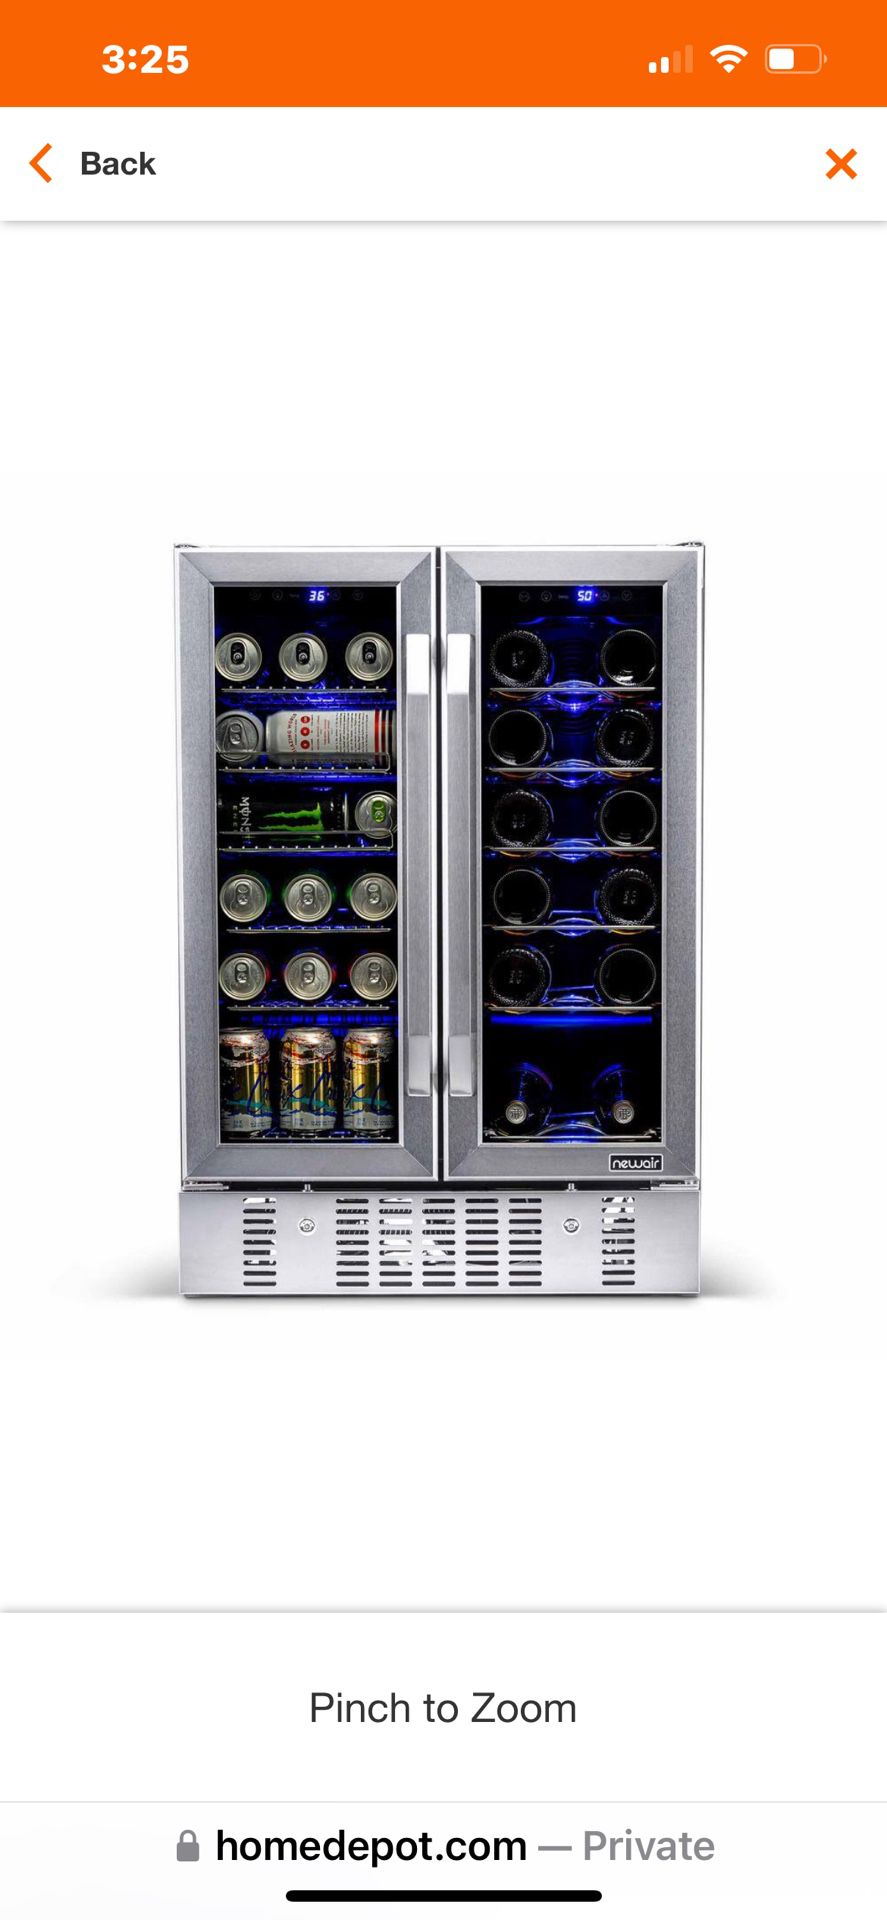 NewAir Dual Zone, Stainless, 24in (depth) Wine & Beverage Cooler  Fridge w/ French Doors & Interior LED Blue Mood Light. Model # AWB-360DB